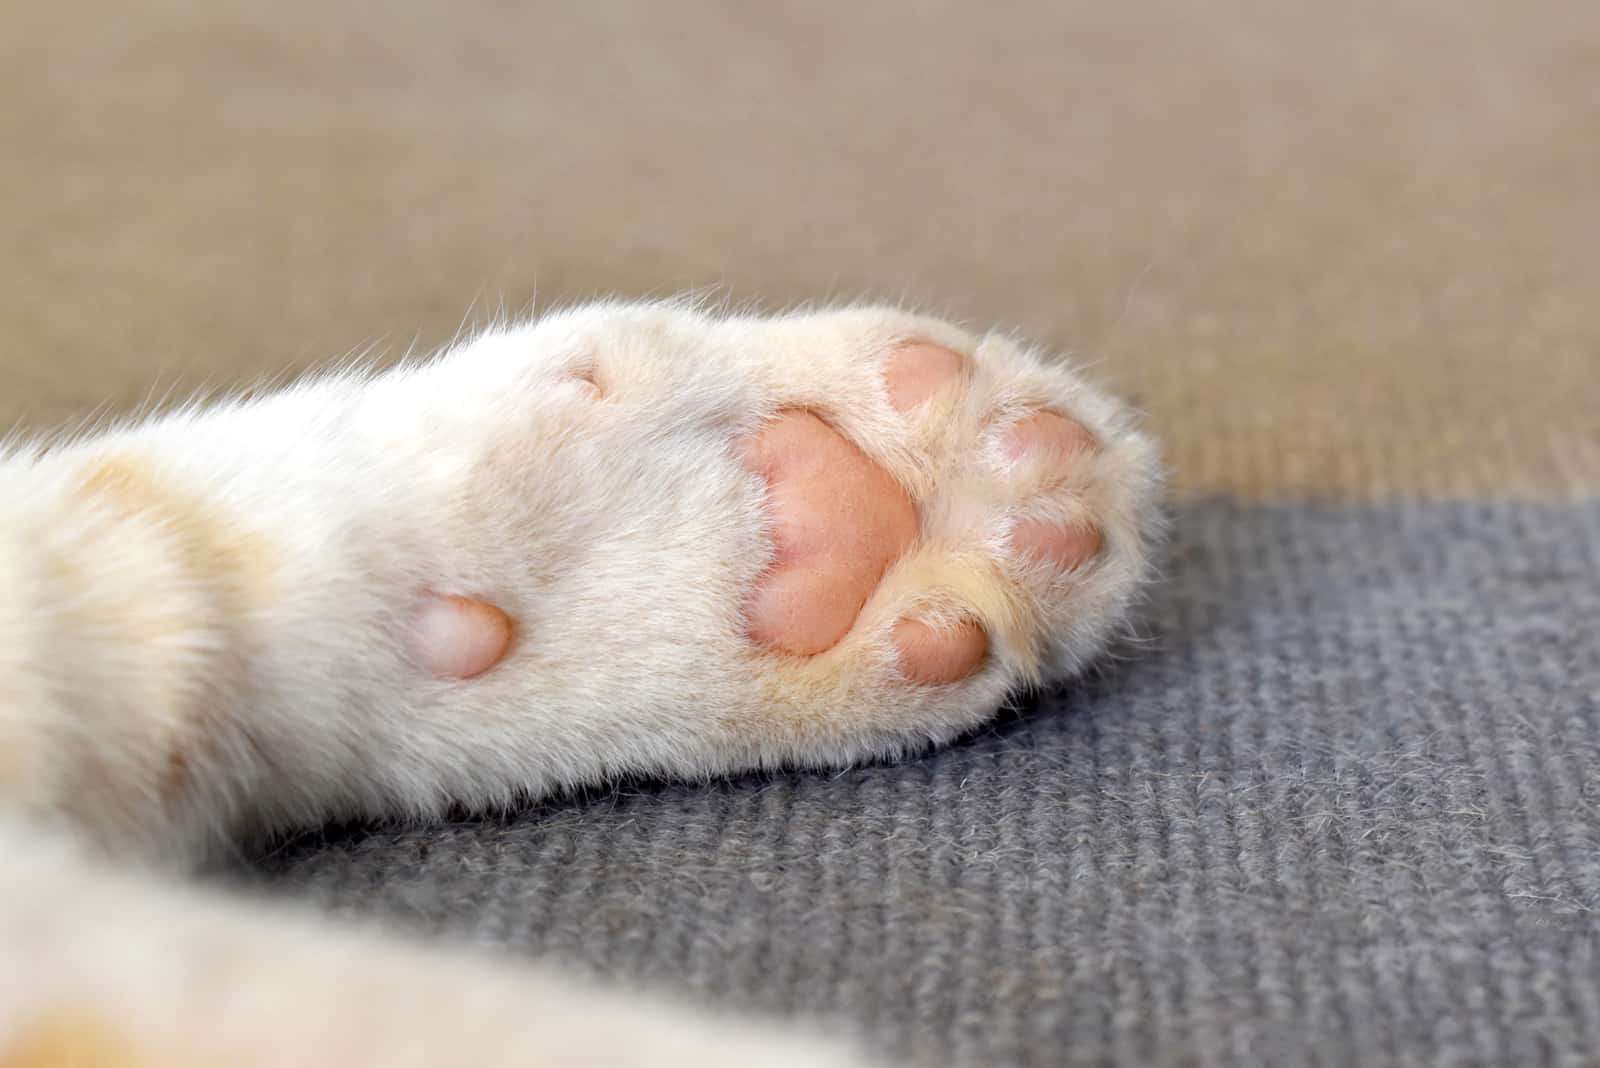 Cat Toe Beans on carpet